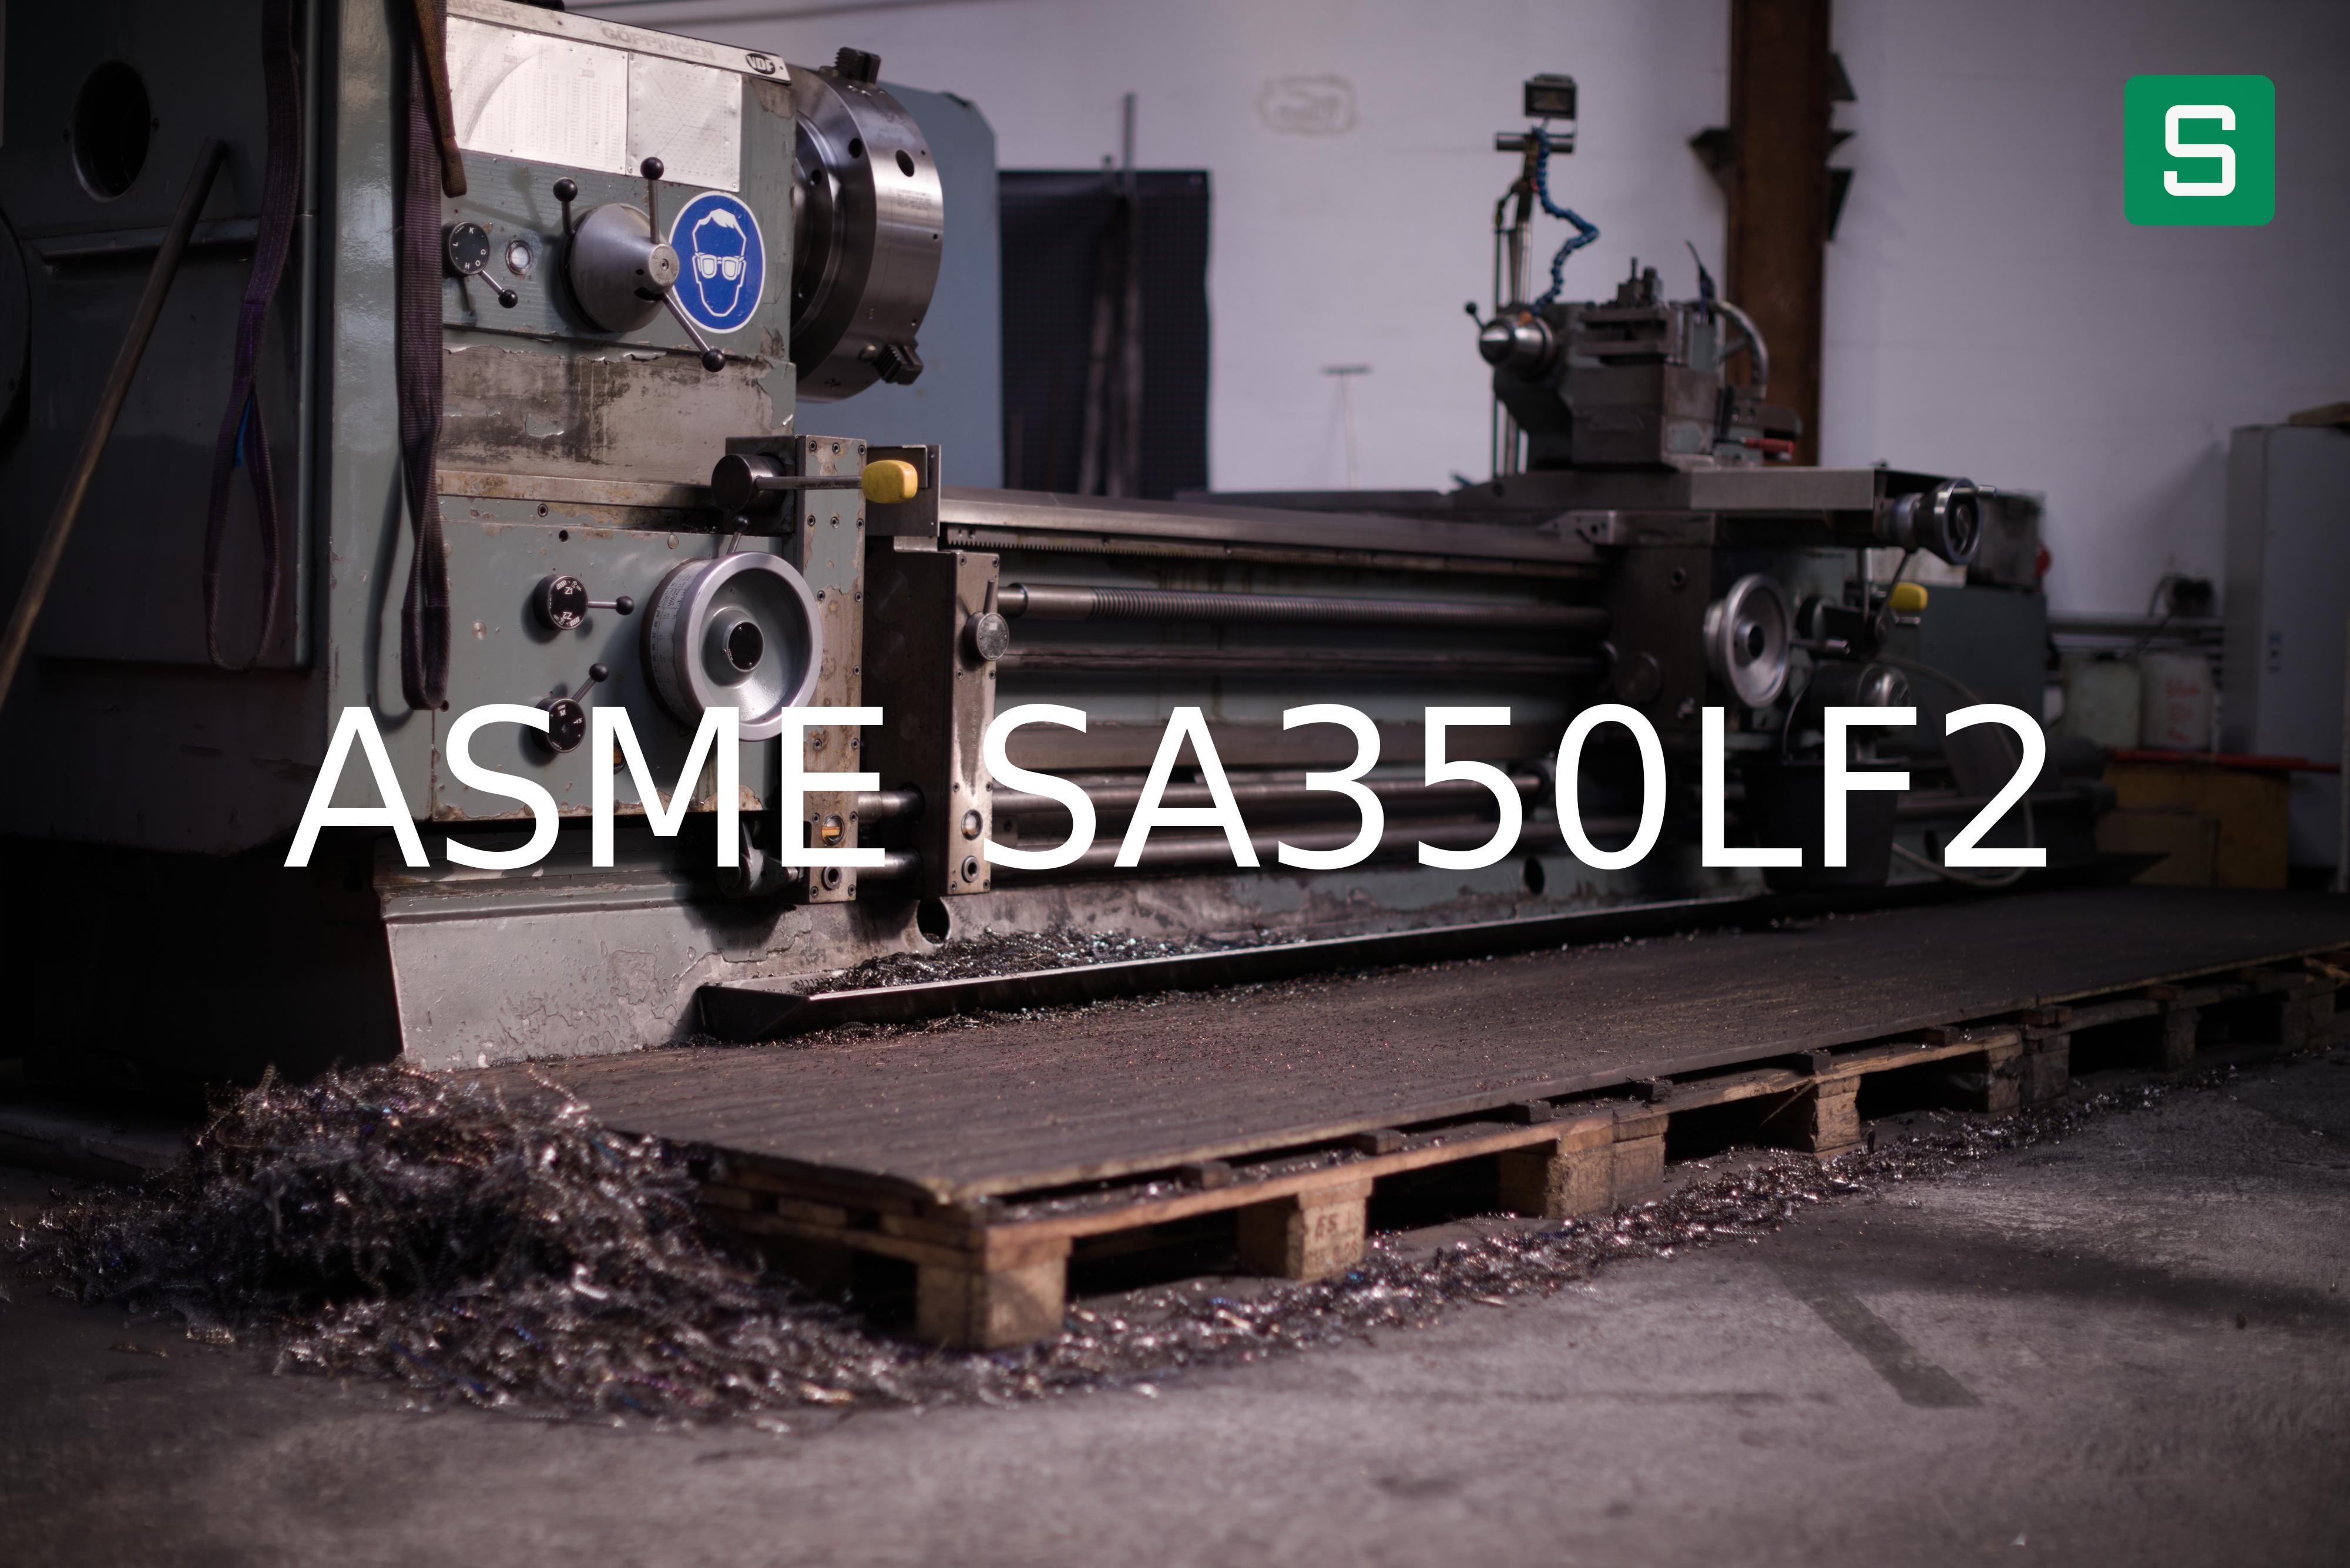 Material de Acero: ASME SA350LF2